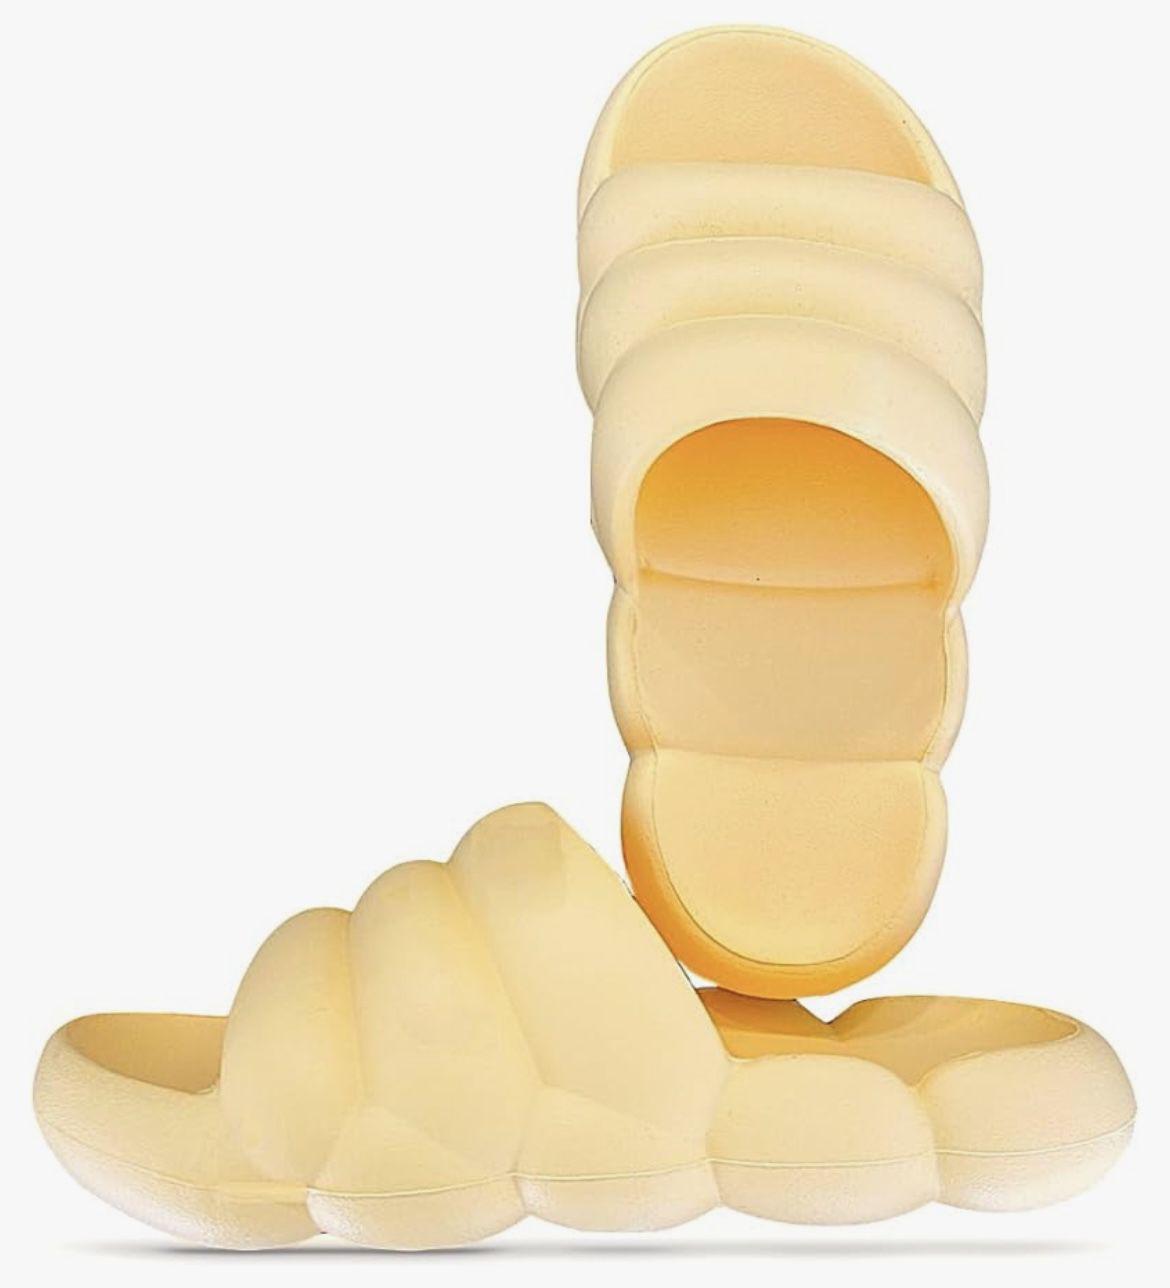 Billows Cloud Slip-Ons, Yellow, Size 8